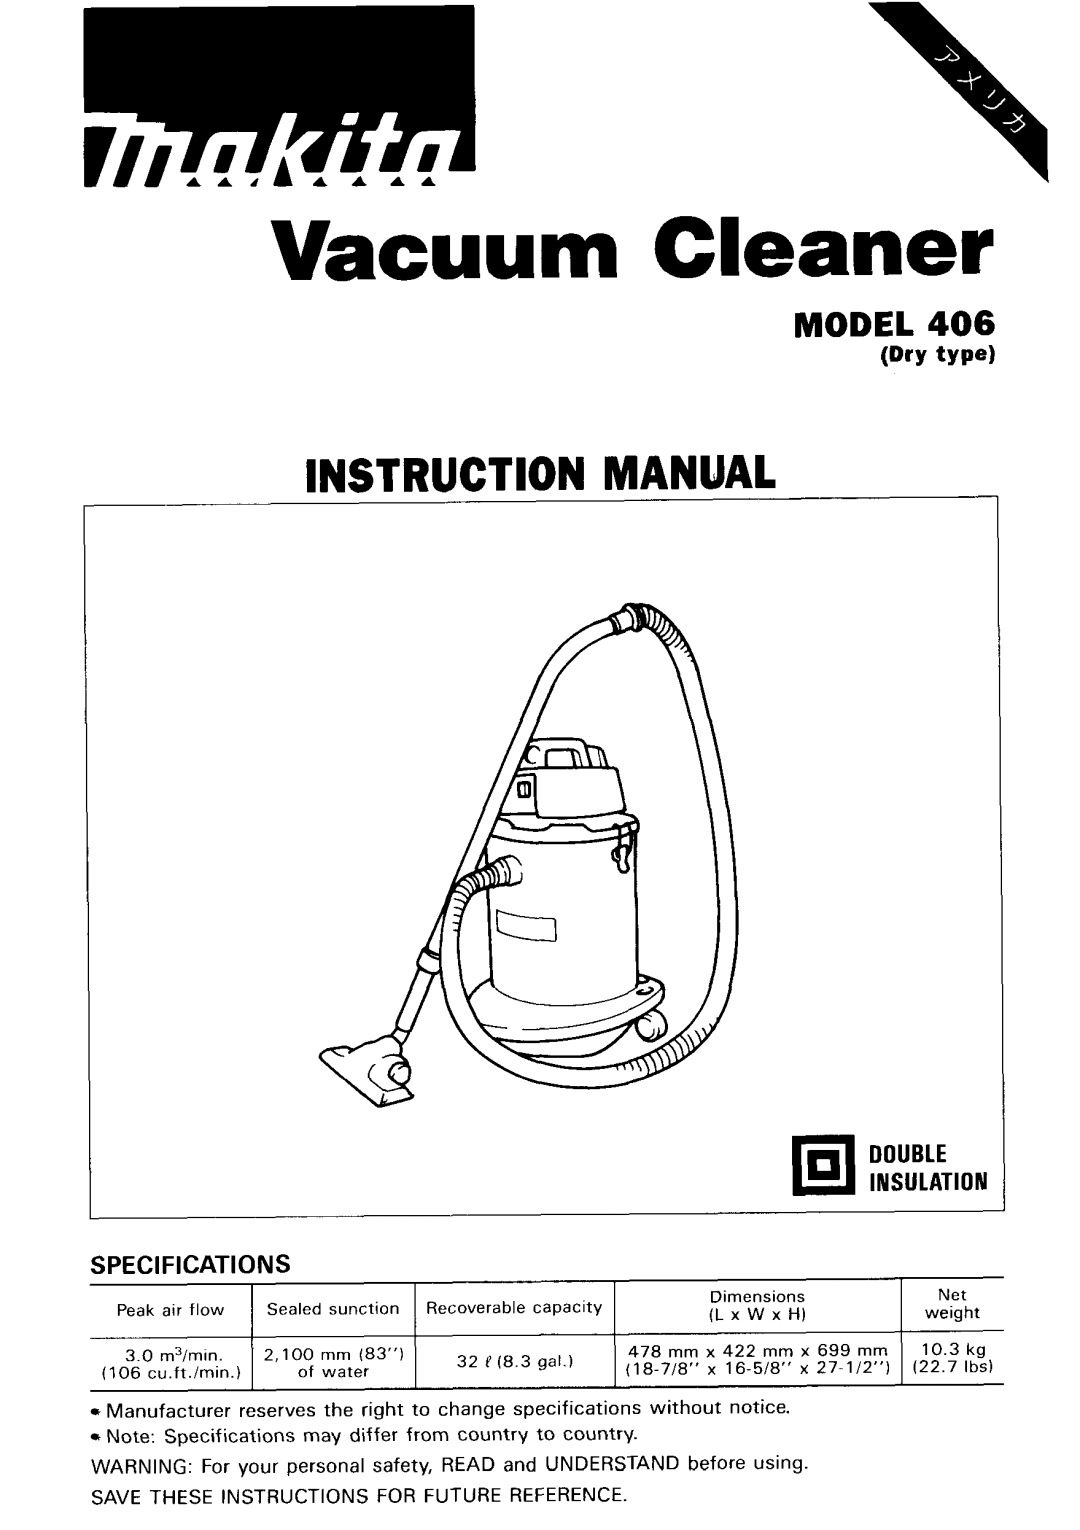 Makita 406 instruction manual Vacuum Cleaner, Model, Dry type, Double, INSULATI0N 